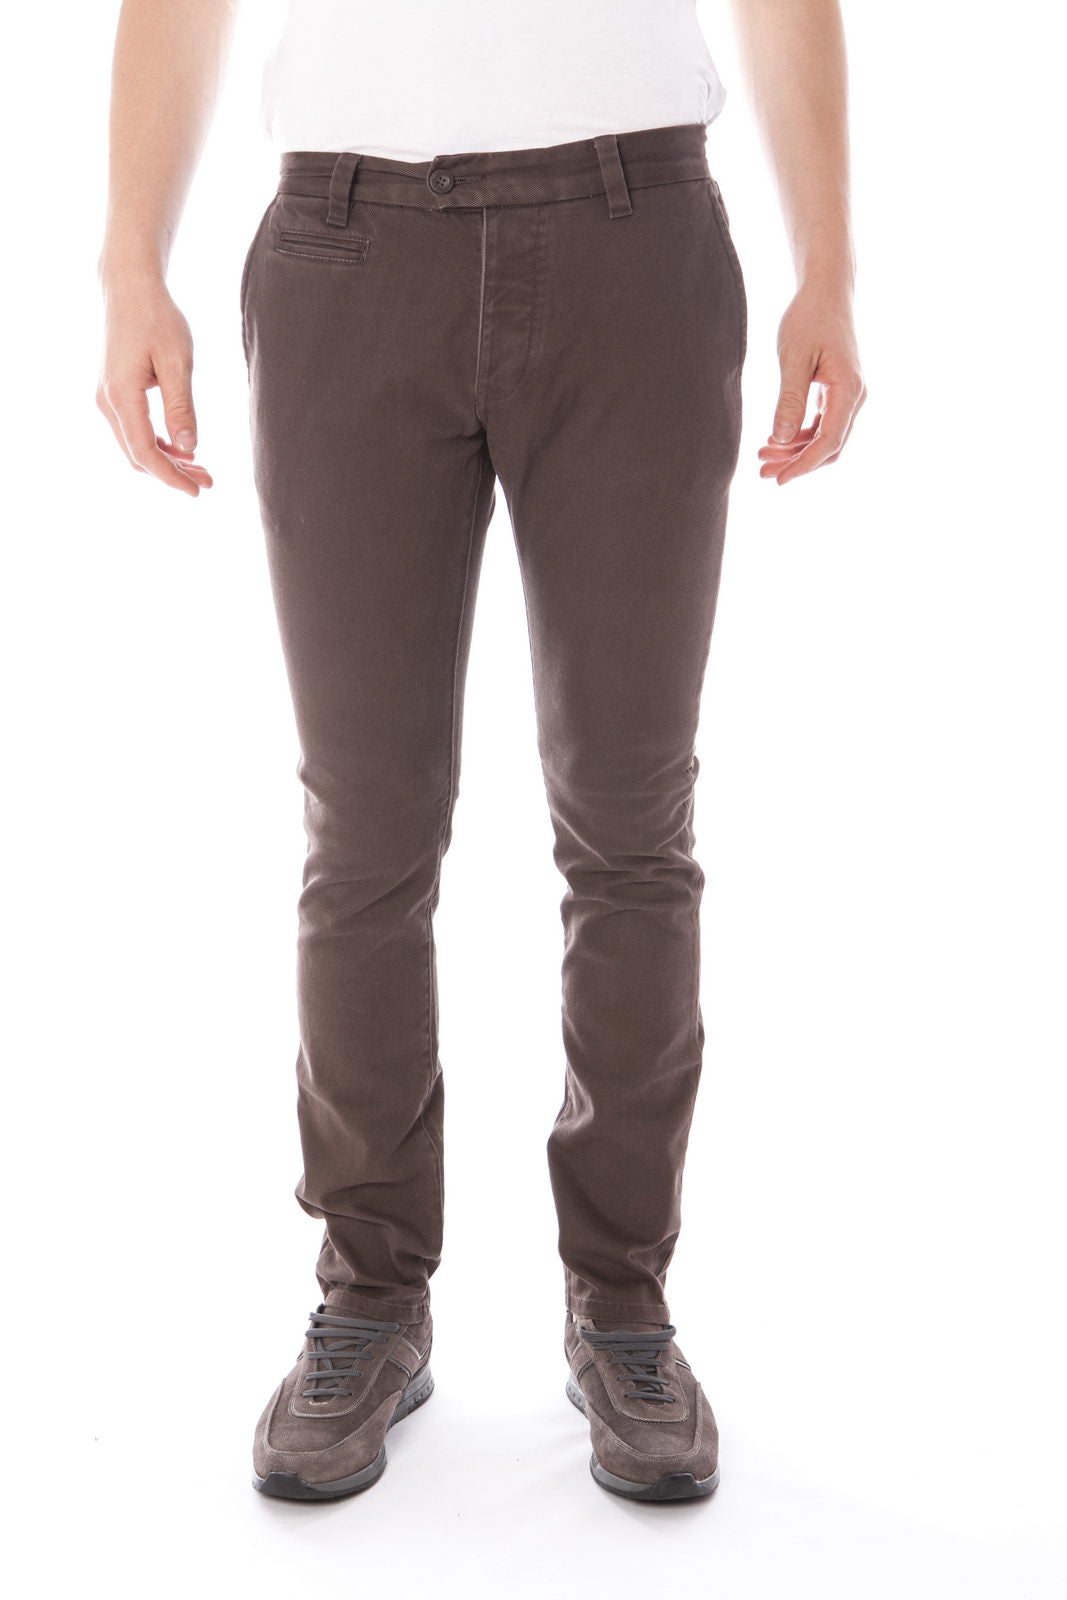 Pantaloni Armani Jeans Marrone M - Cotone Elastan